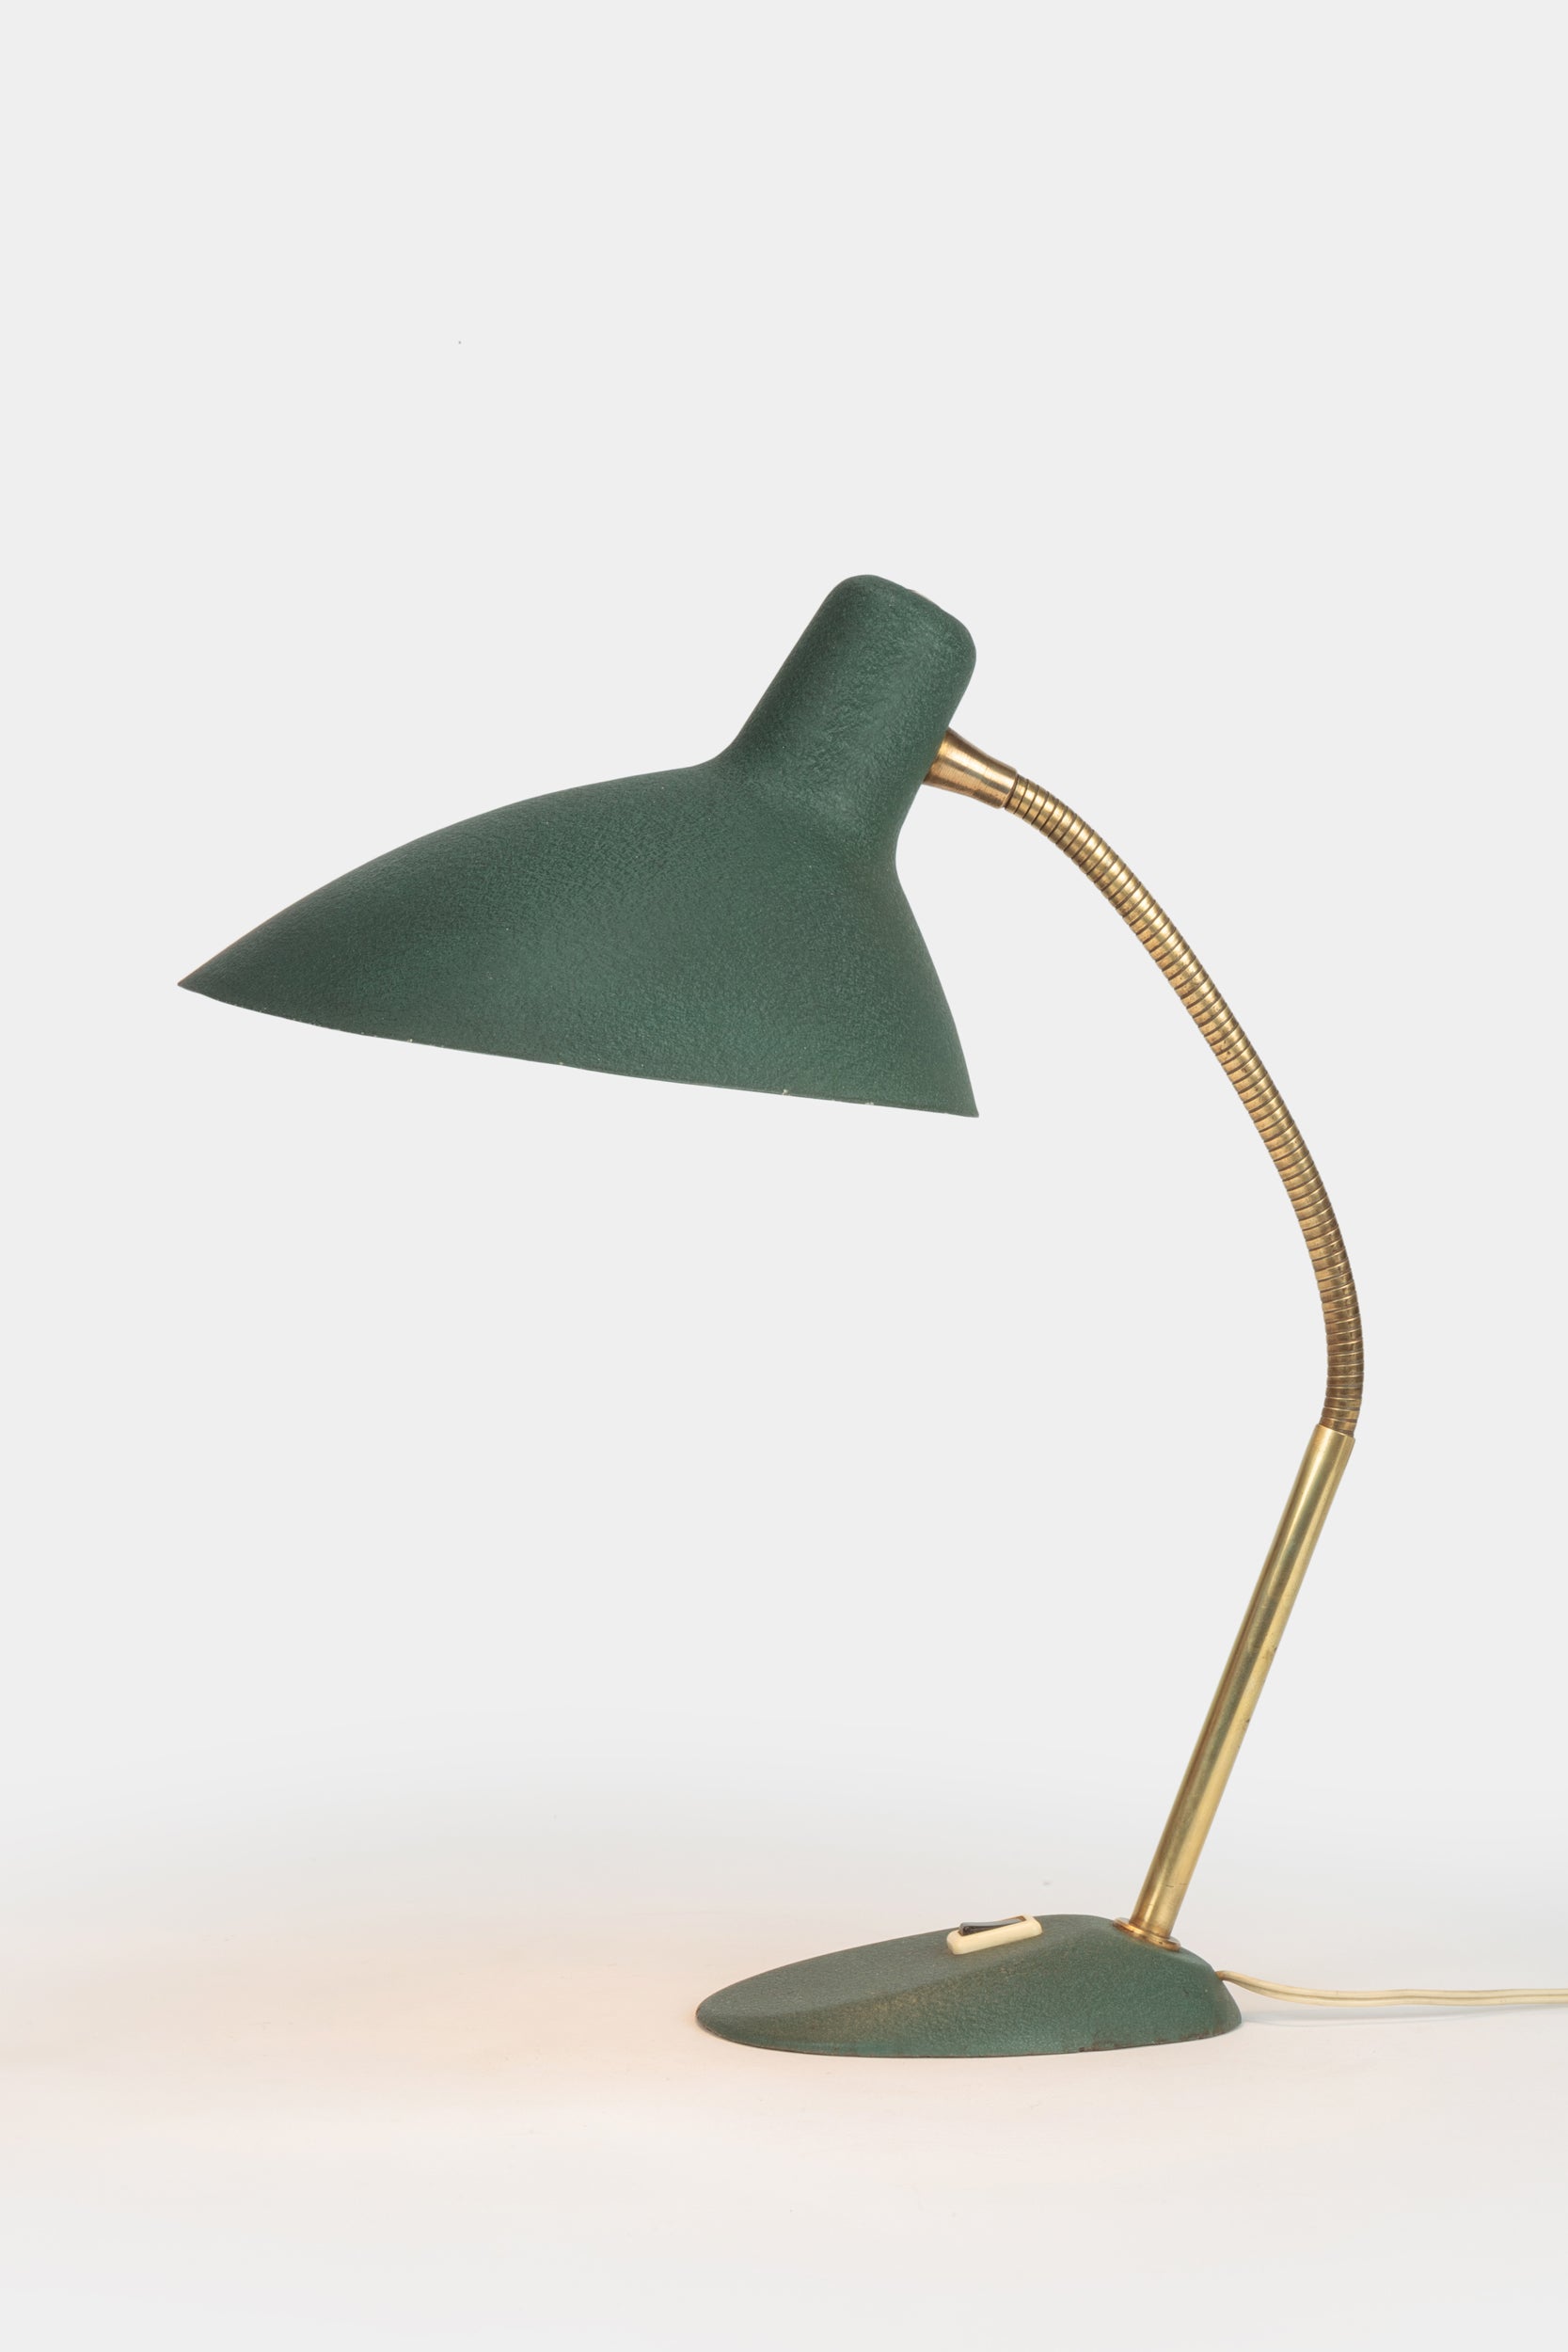 Boris Lacroix Jumo Office Lamp, 50s